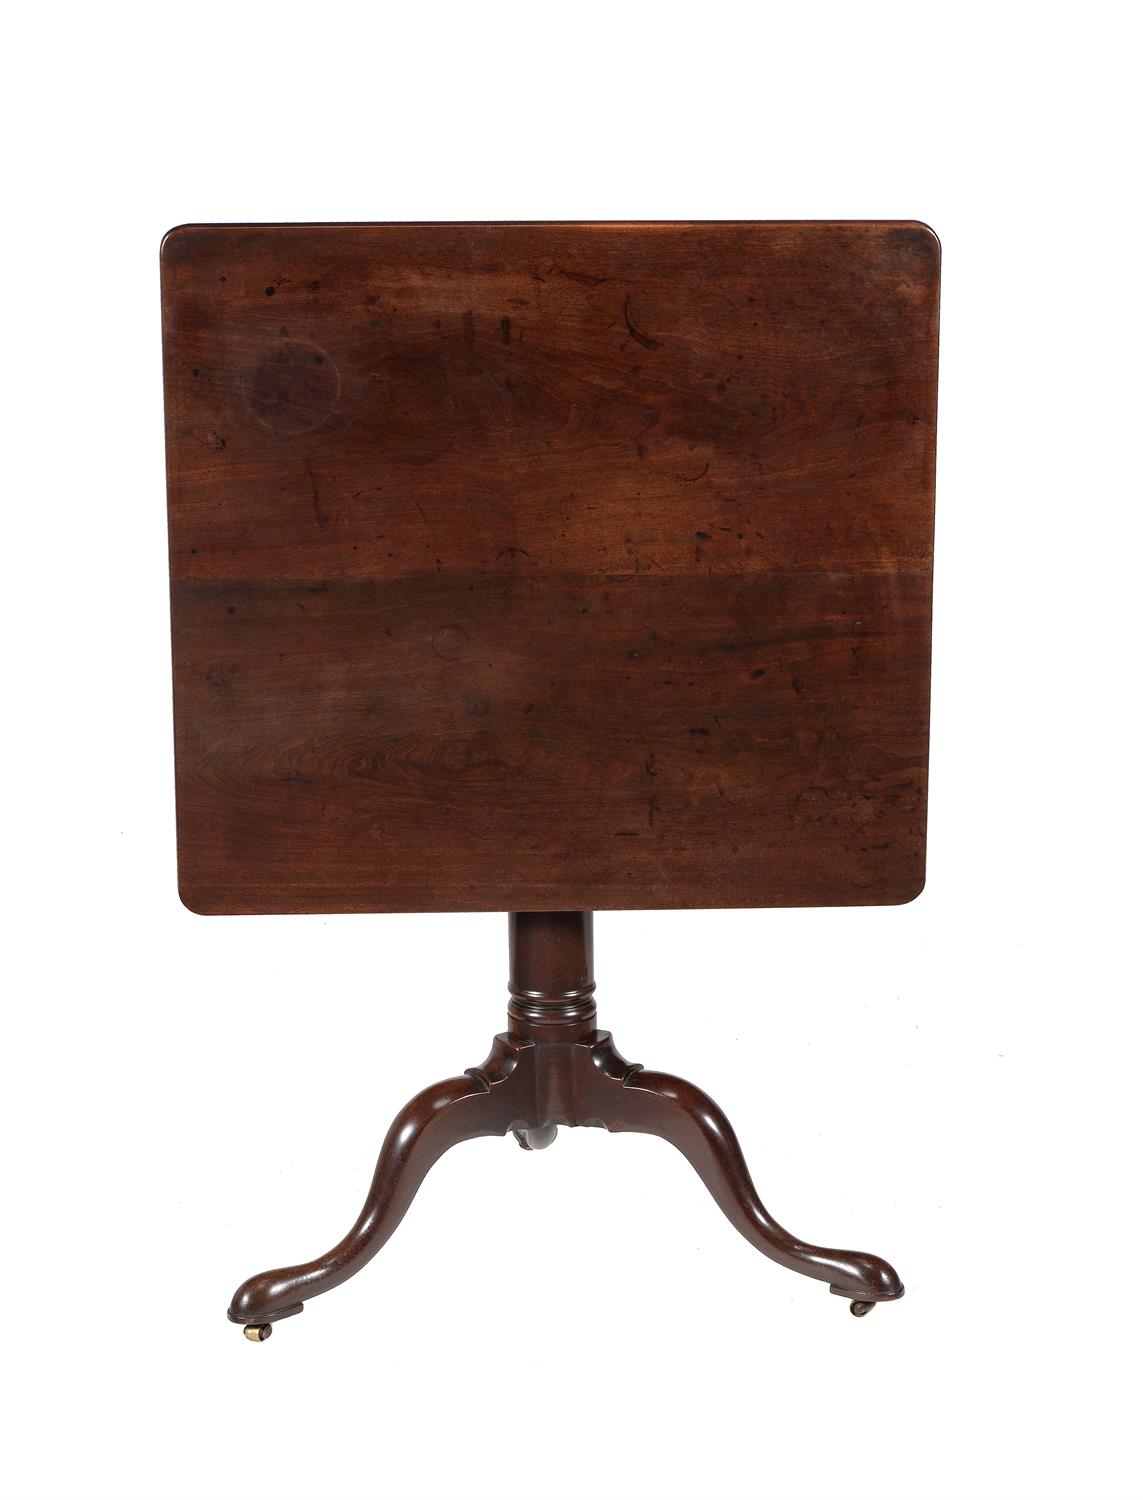 A George II mahogany tripod table - Image 2 of 3